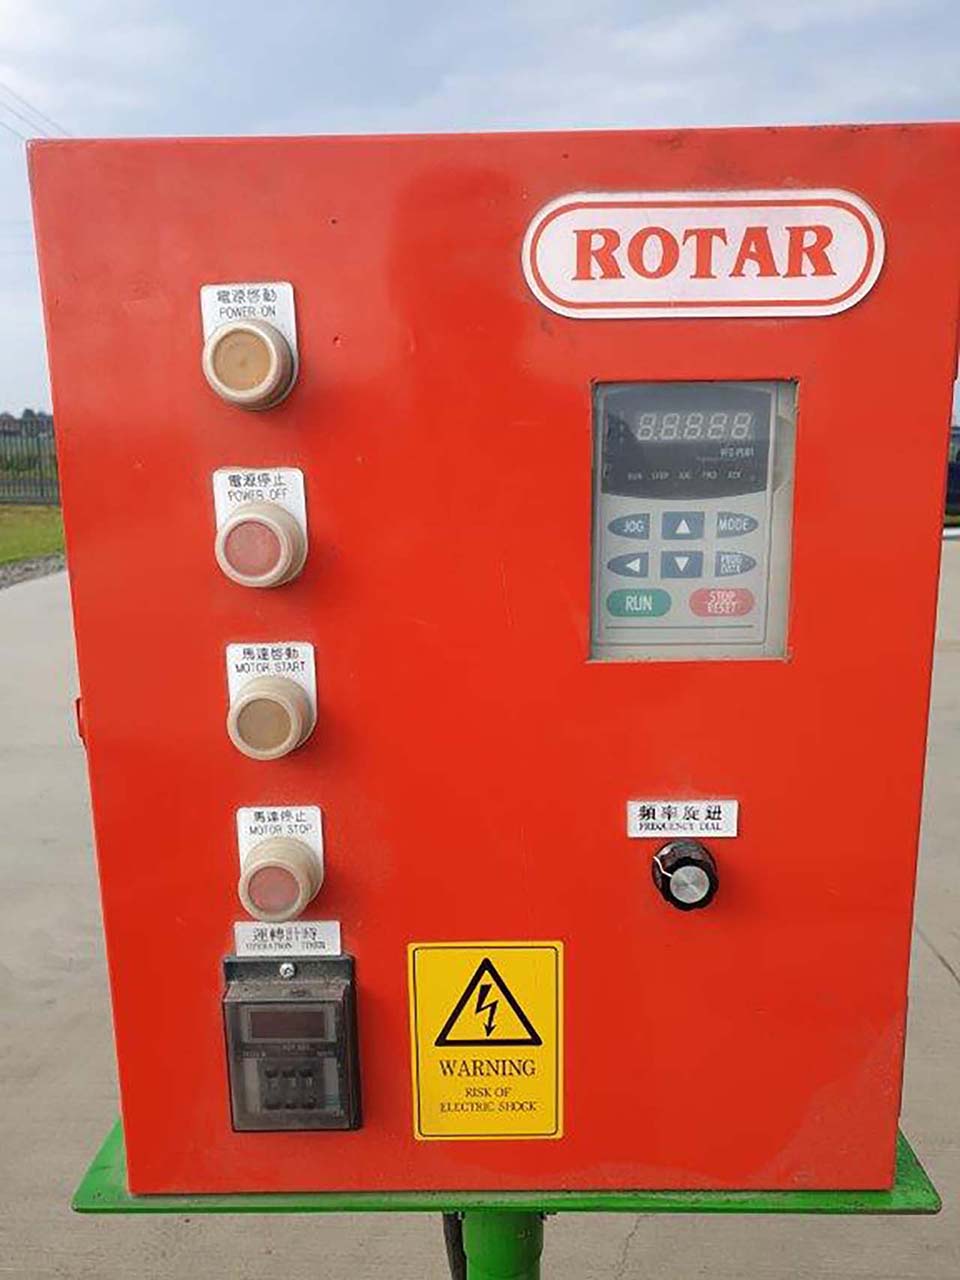 Rotar VBUC 80 rotary vibratory finishing machine GA2226, used